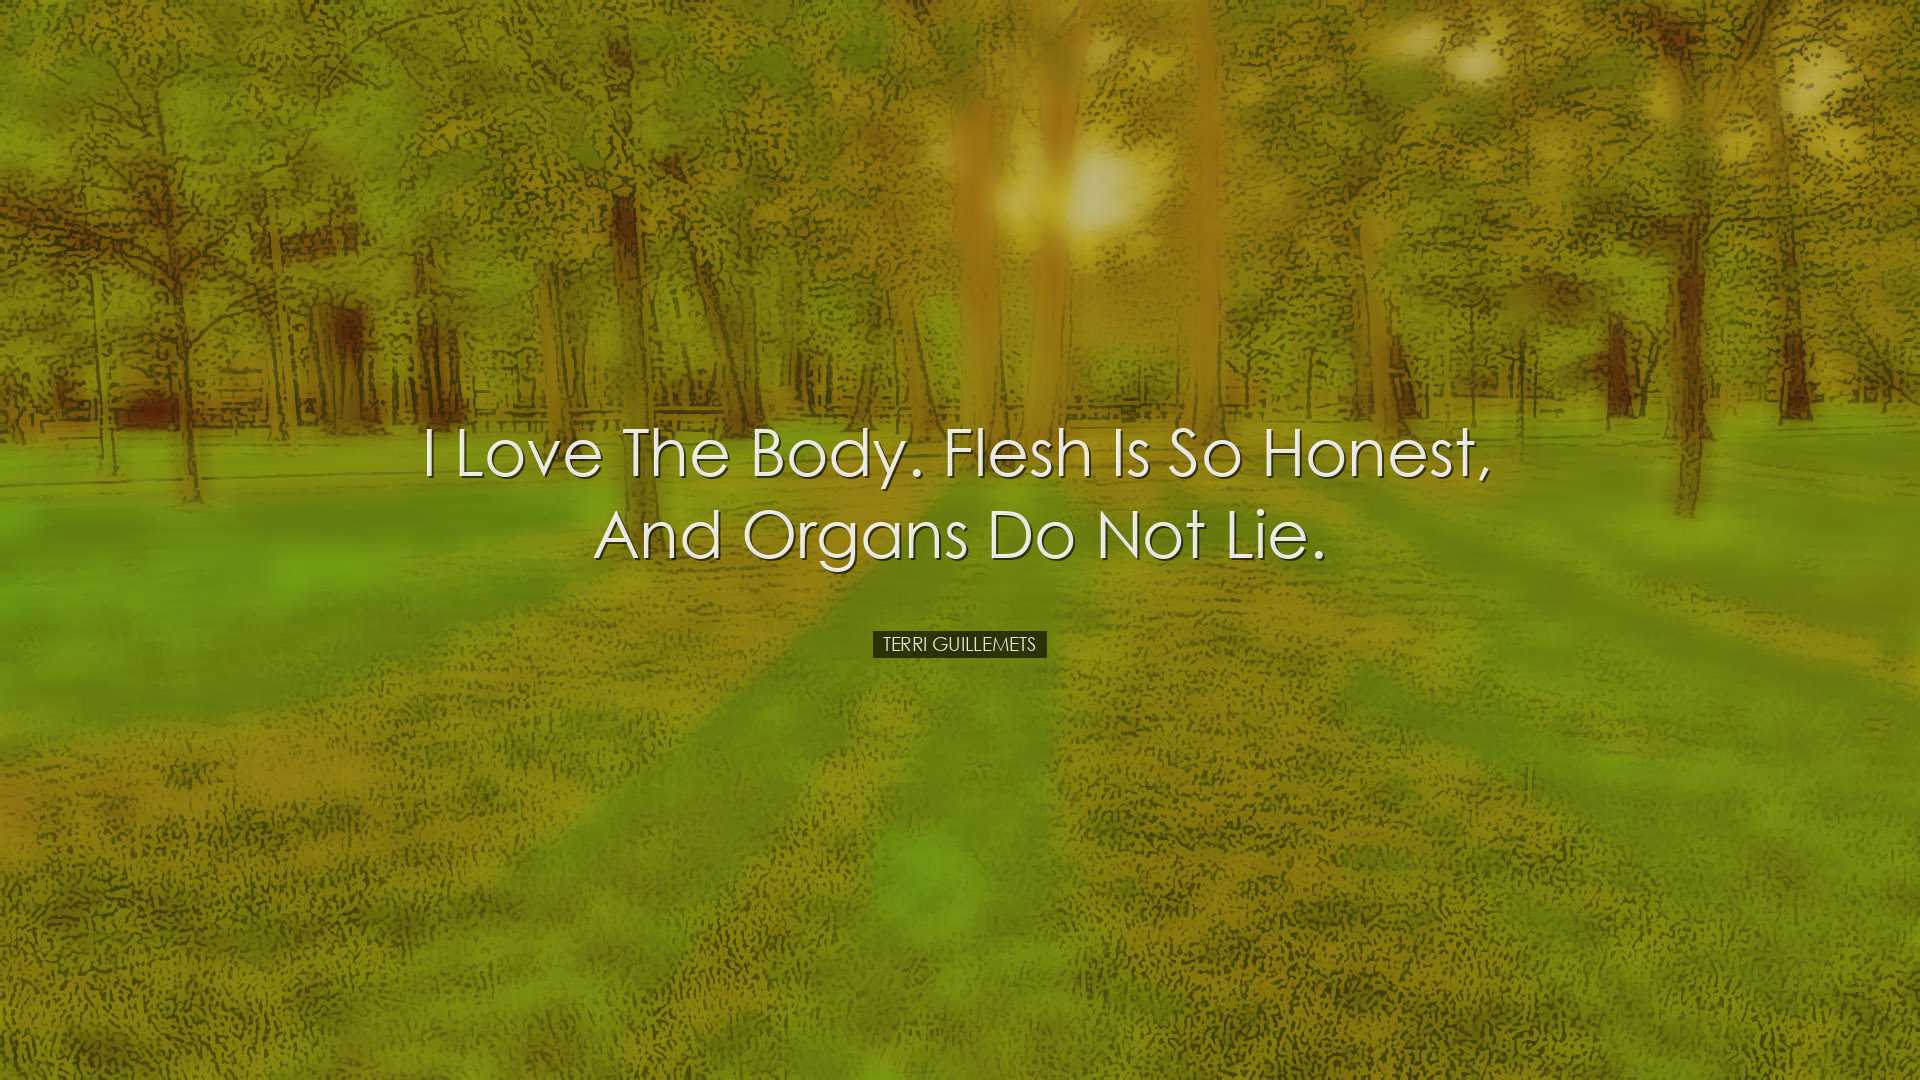 I love the body. Flesh is so honest, and organs do not lie. - Terr